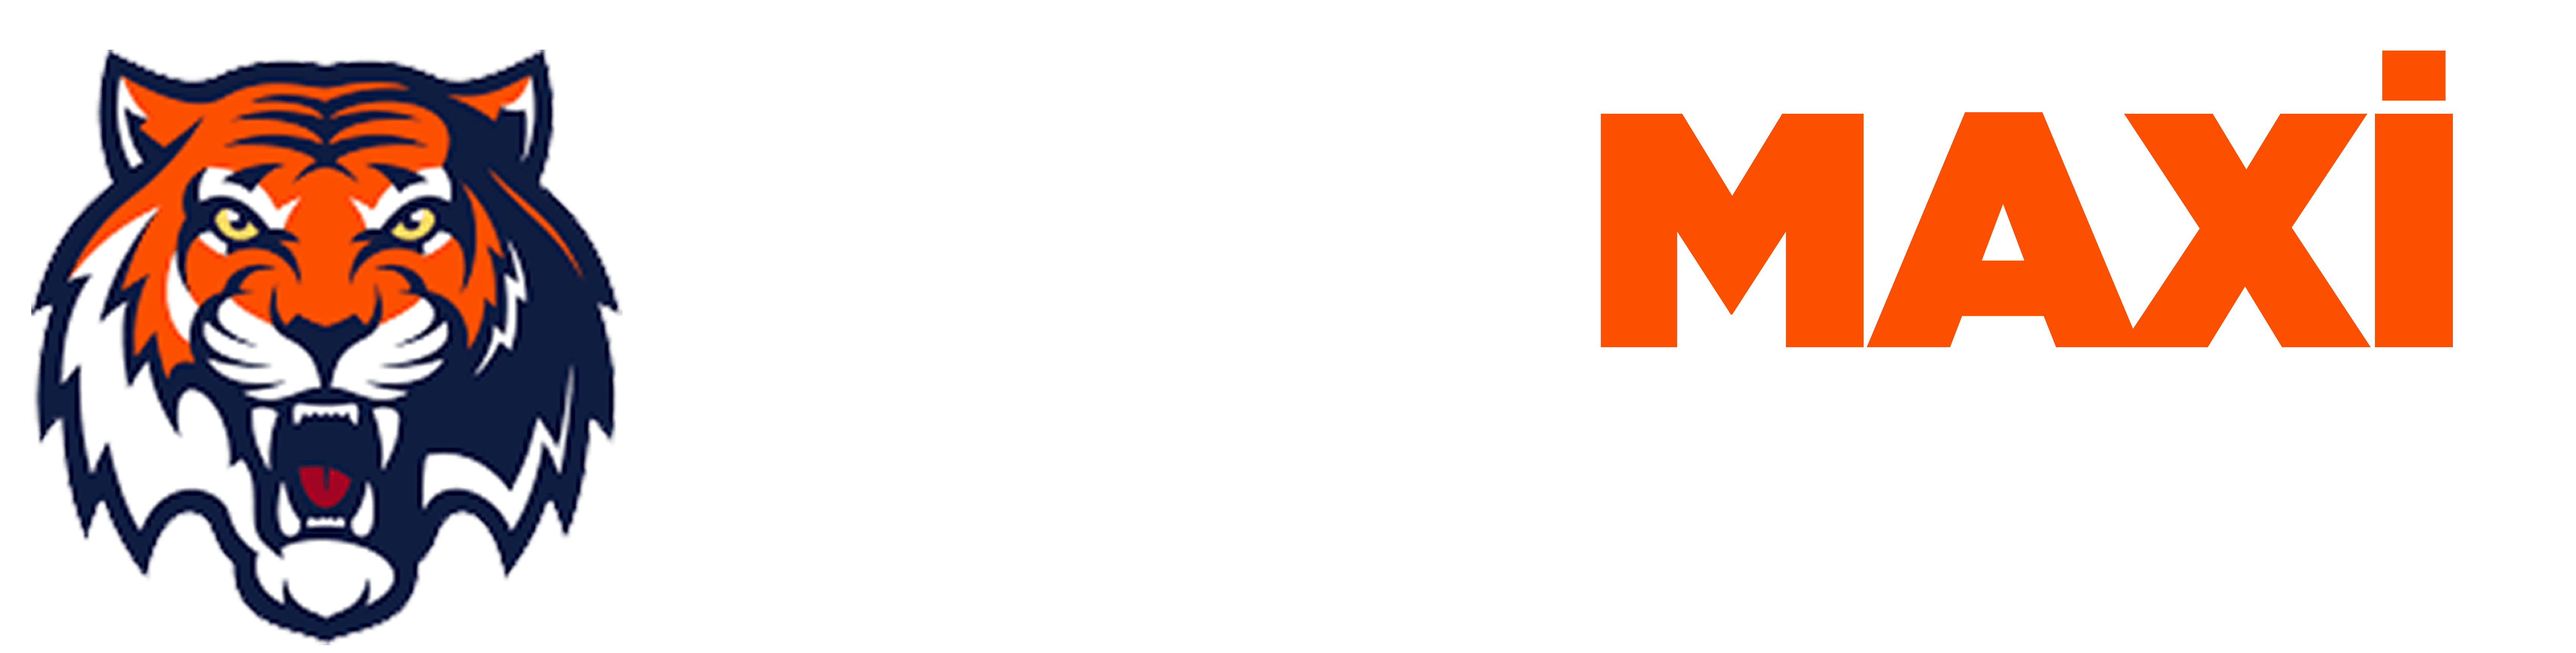 Webmaster Forumu  - Turkmaxi.org